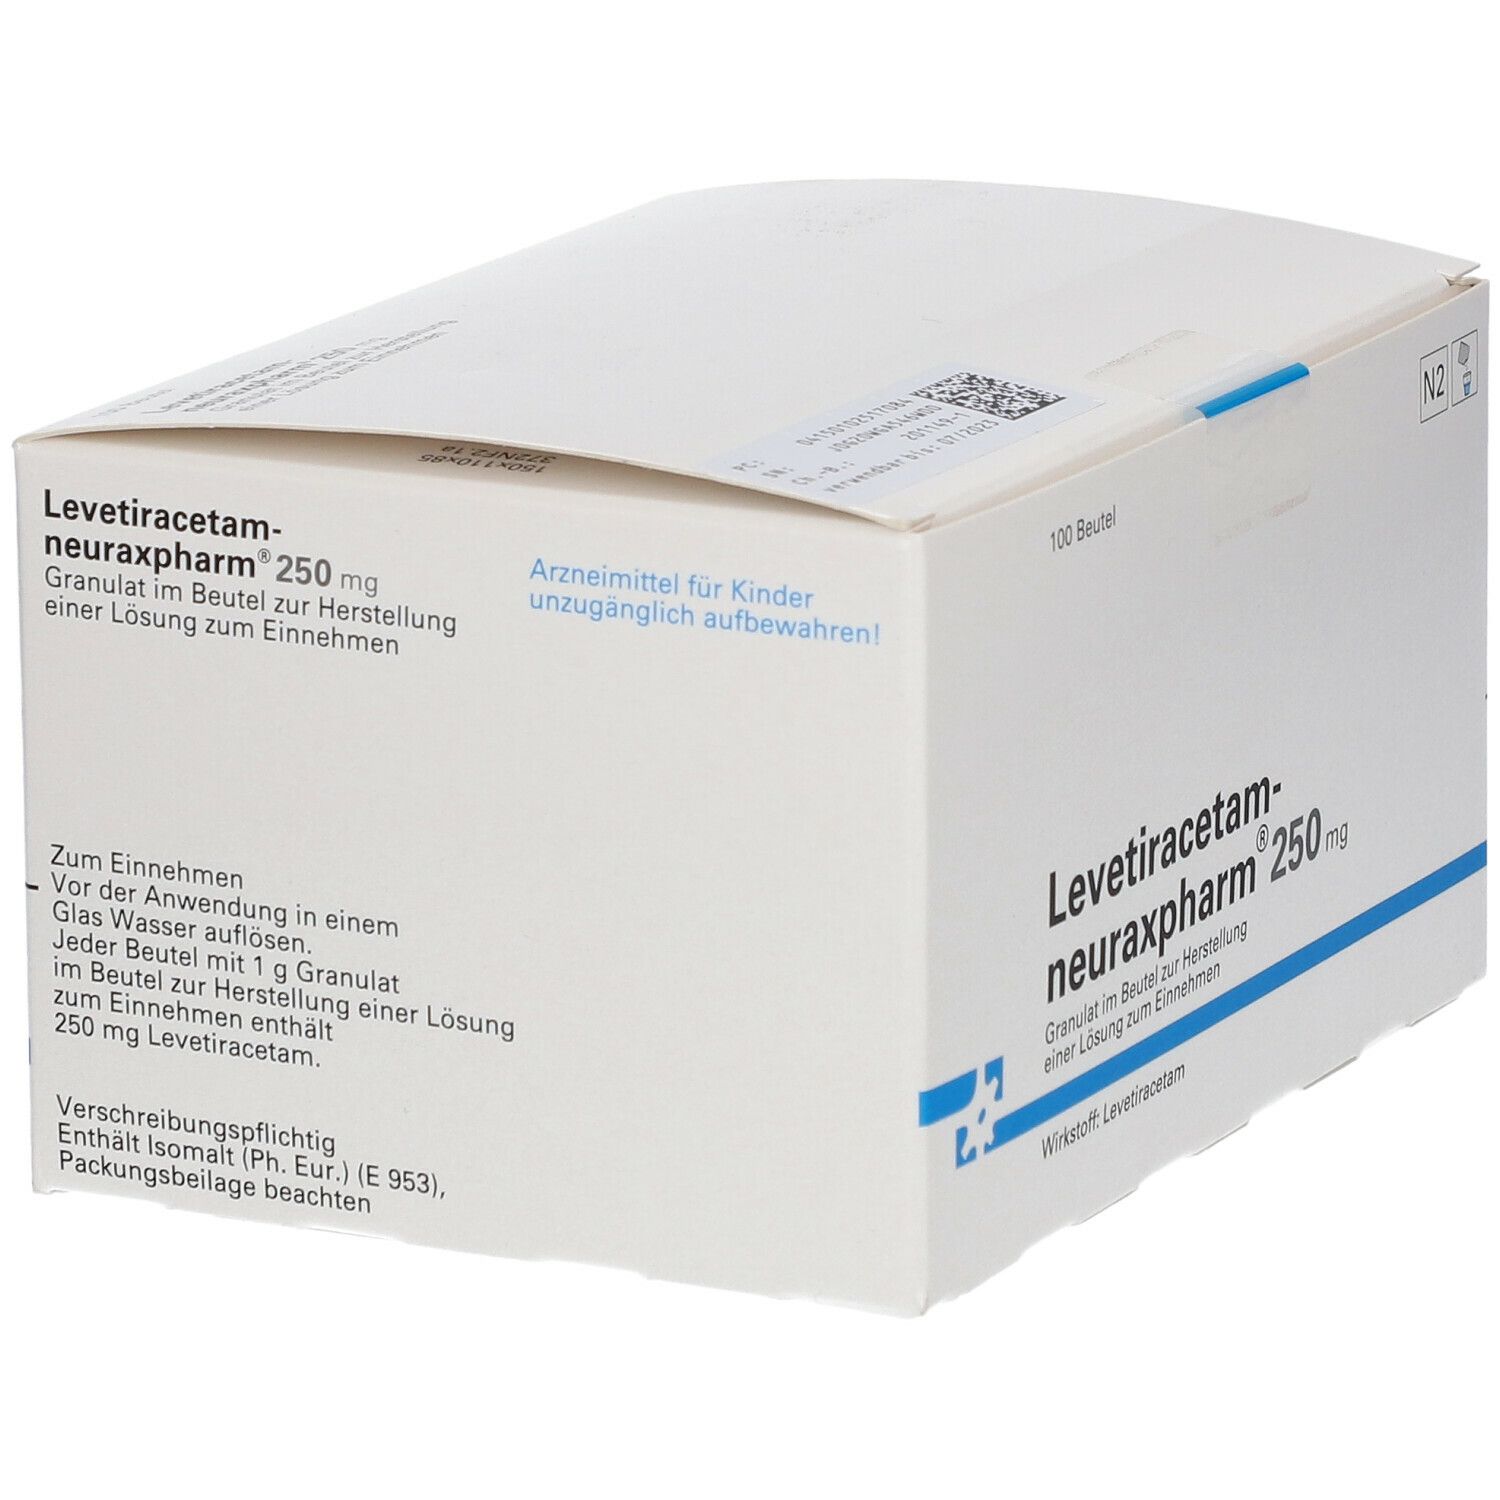 Levetiracetam-neuraxpharm® 250 mg